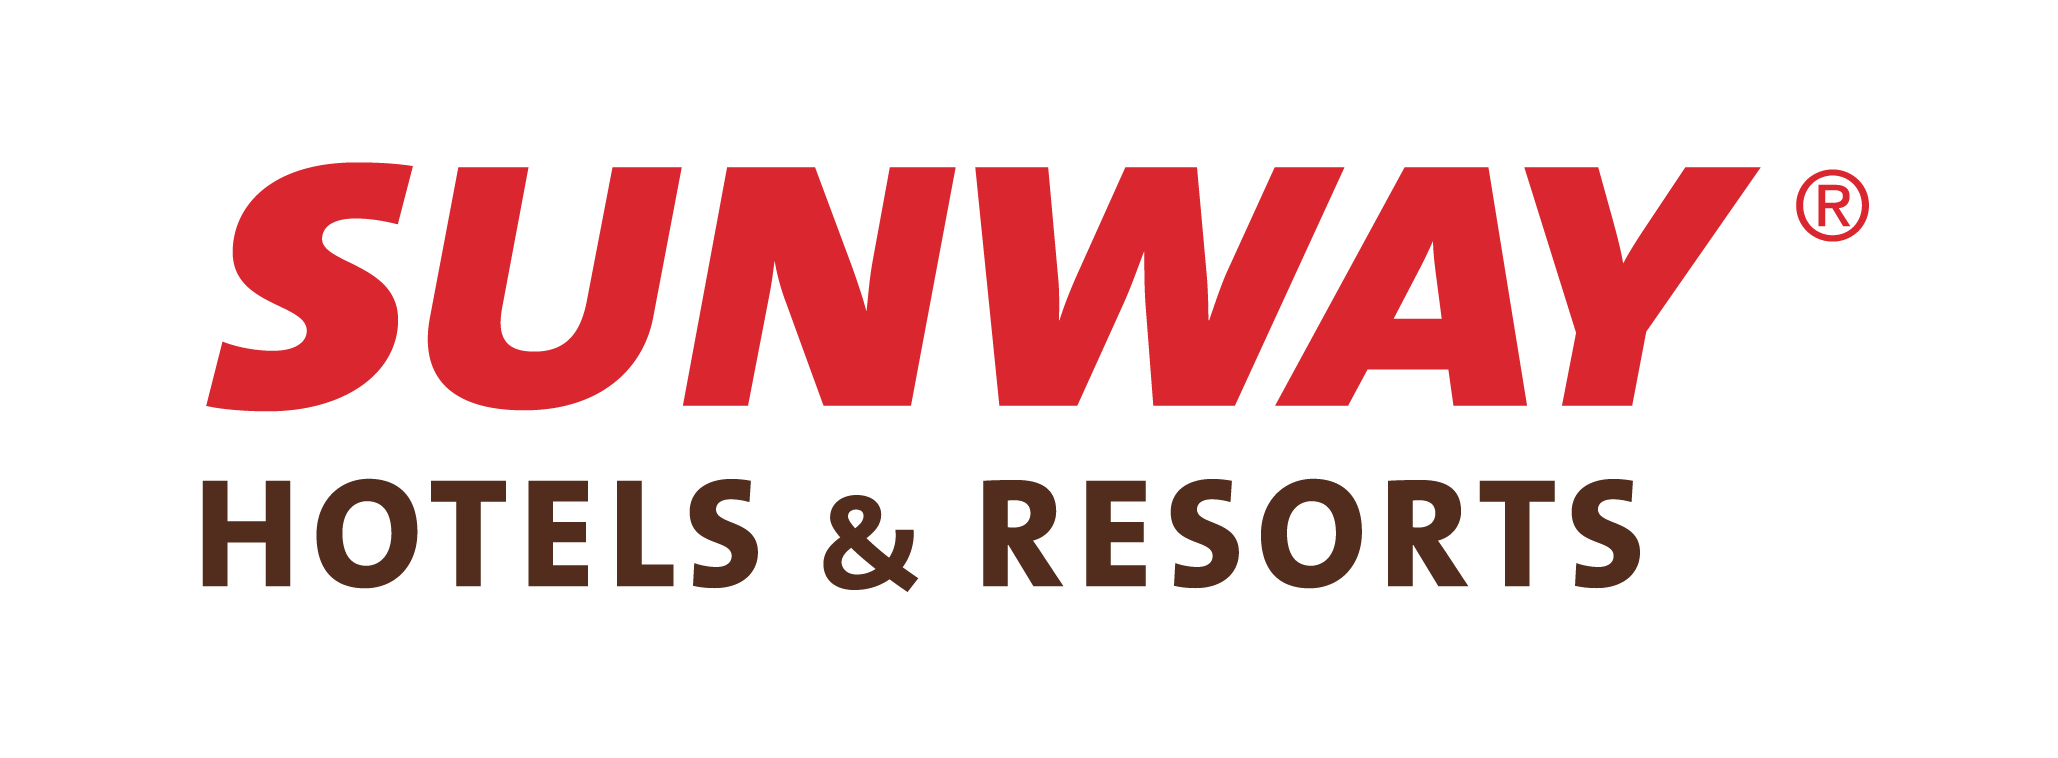 Hotels and Resorts Logo - Sunway Hotels & Resorts. Family Hotels, Resort Hotels